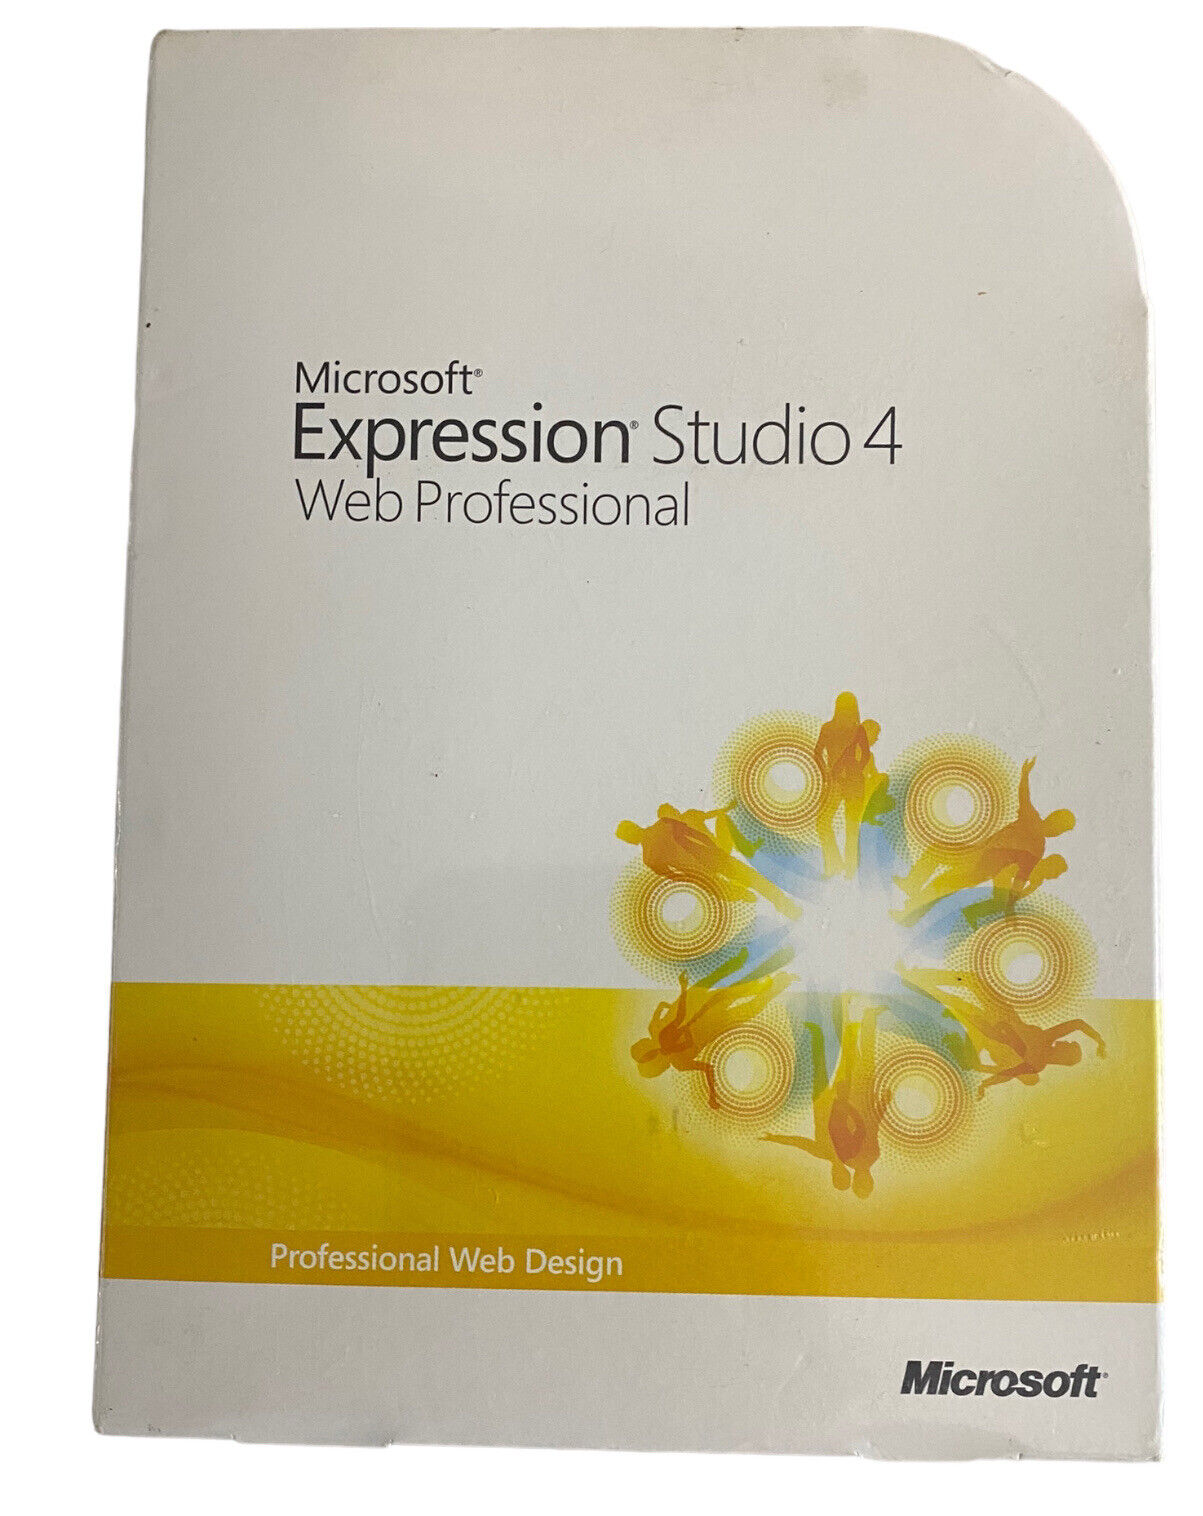 MS Microsoft Expression Studio 4 English DVD =NEW BOX=